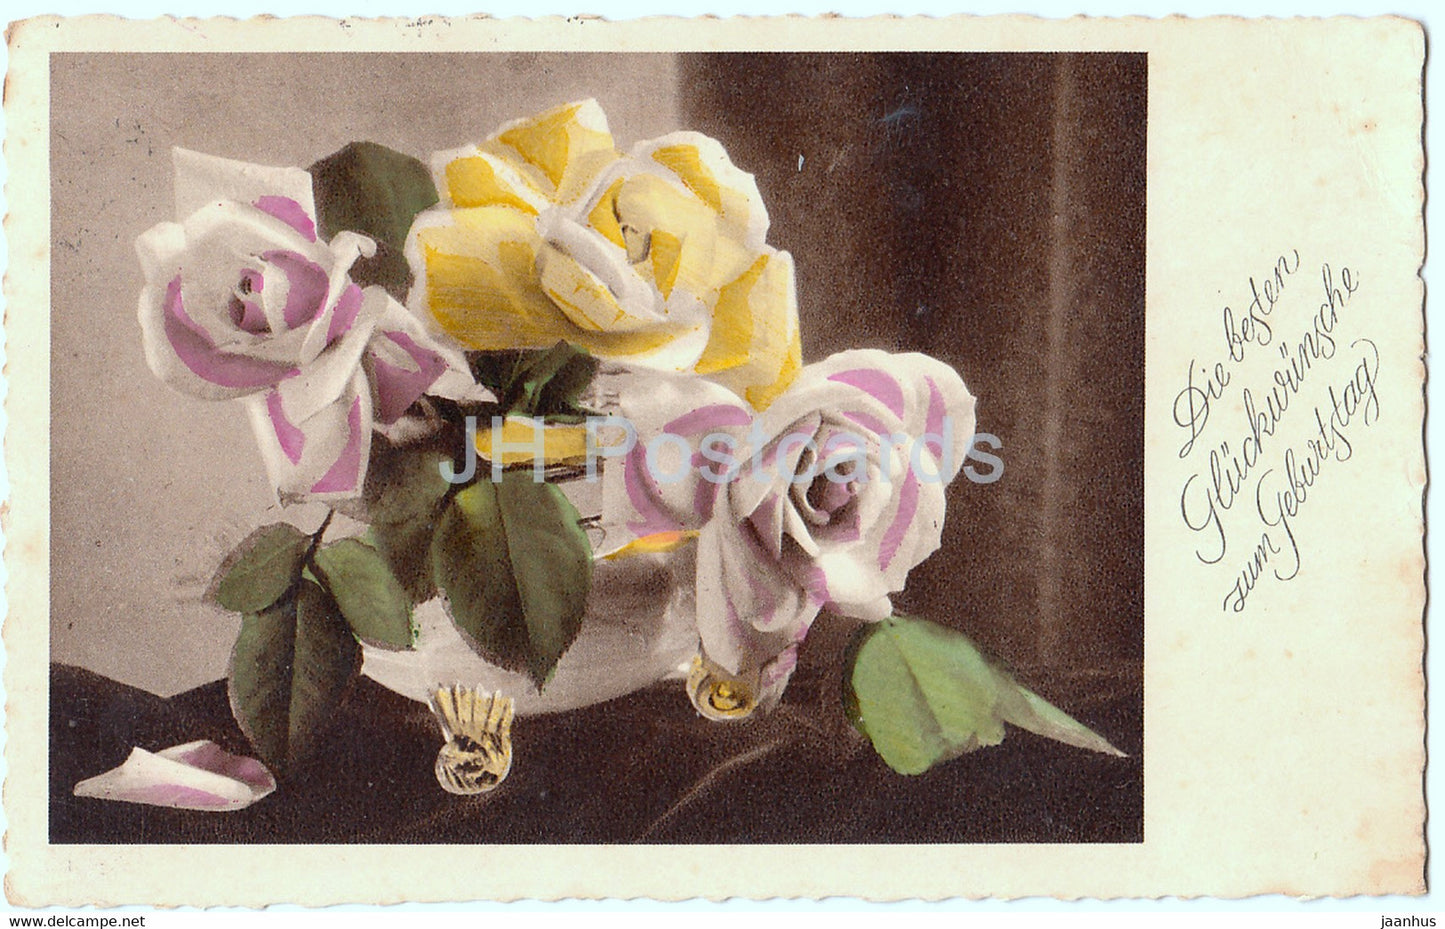 Birthday Greeting Card - Die Besten Gluckwunsche zum Geburtstag - flowers - 8880/2 - old postcard - 1939 Germany - used - JH Postcards